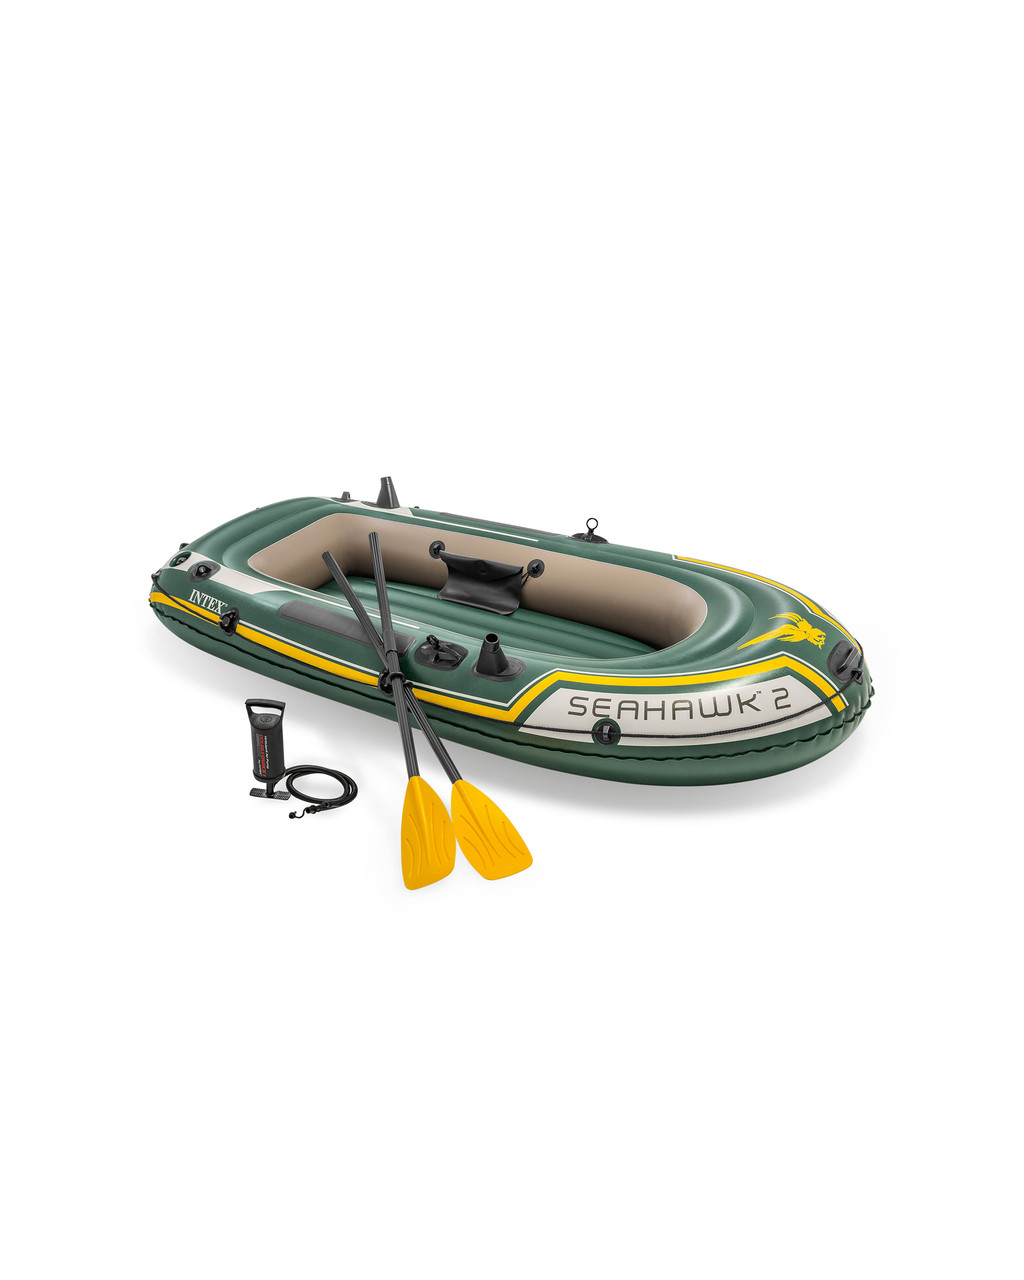 Intex Seahawk 2 Inflatable Boat Set + Oars/Pump/Motor Mount